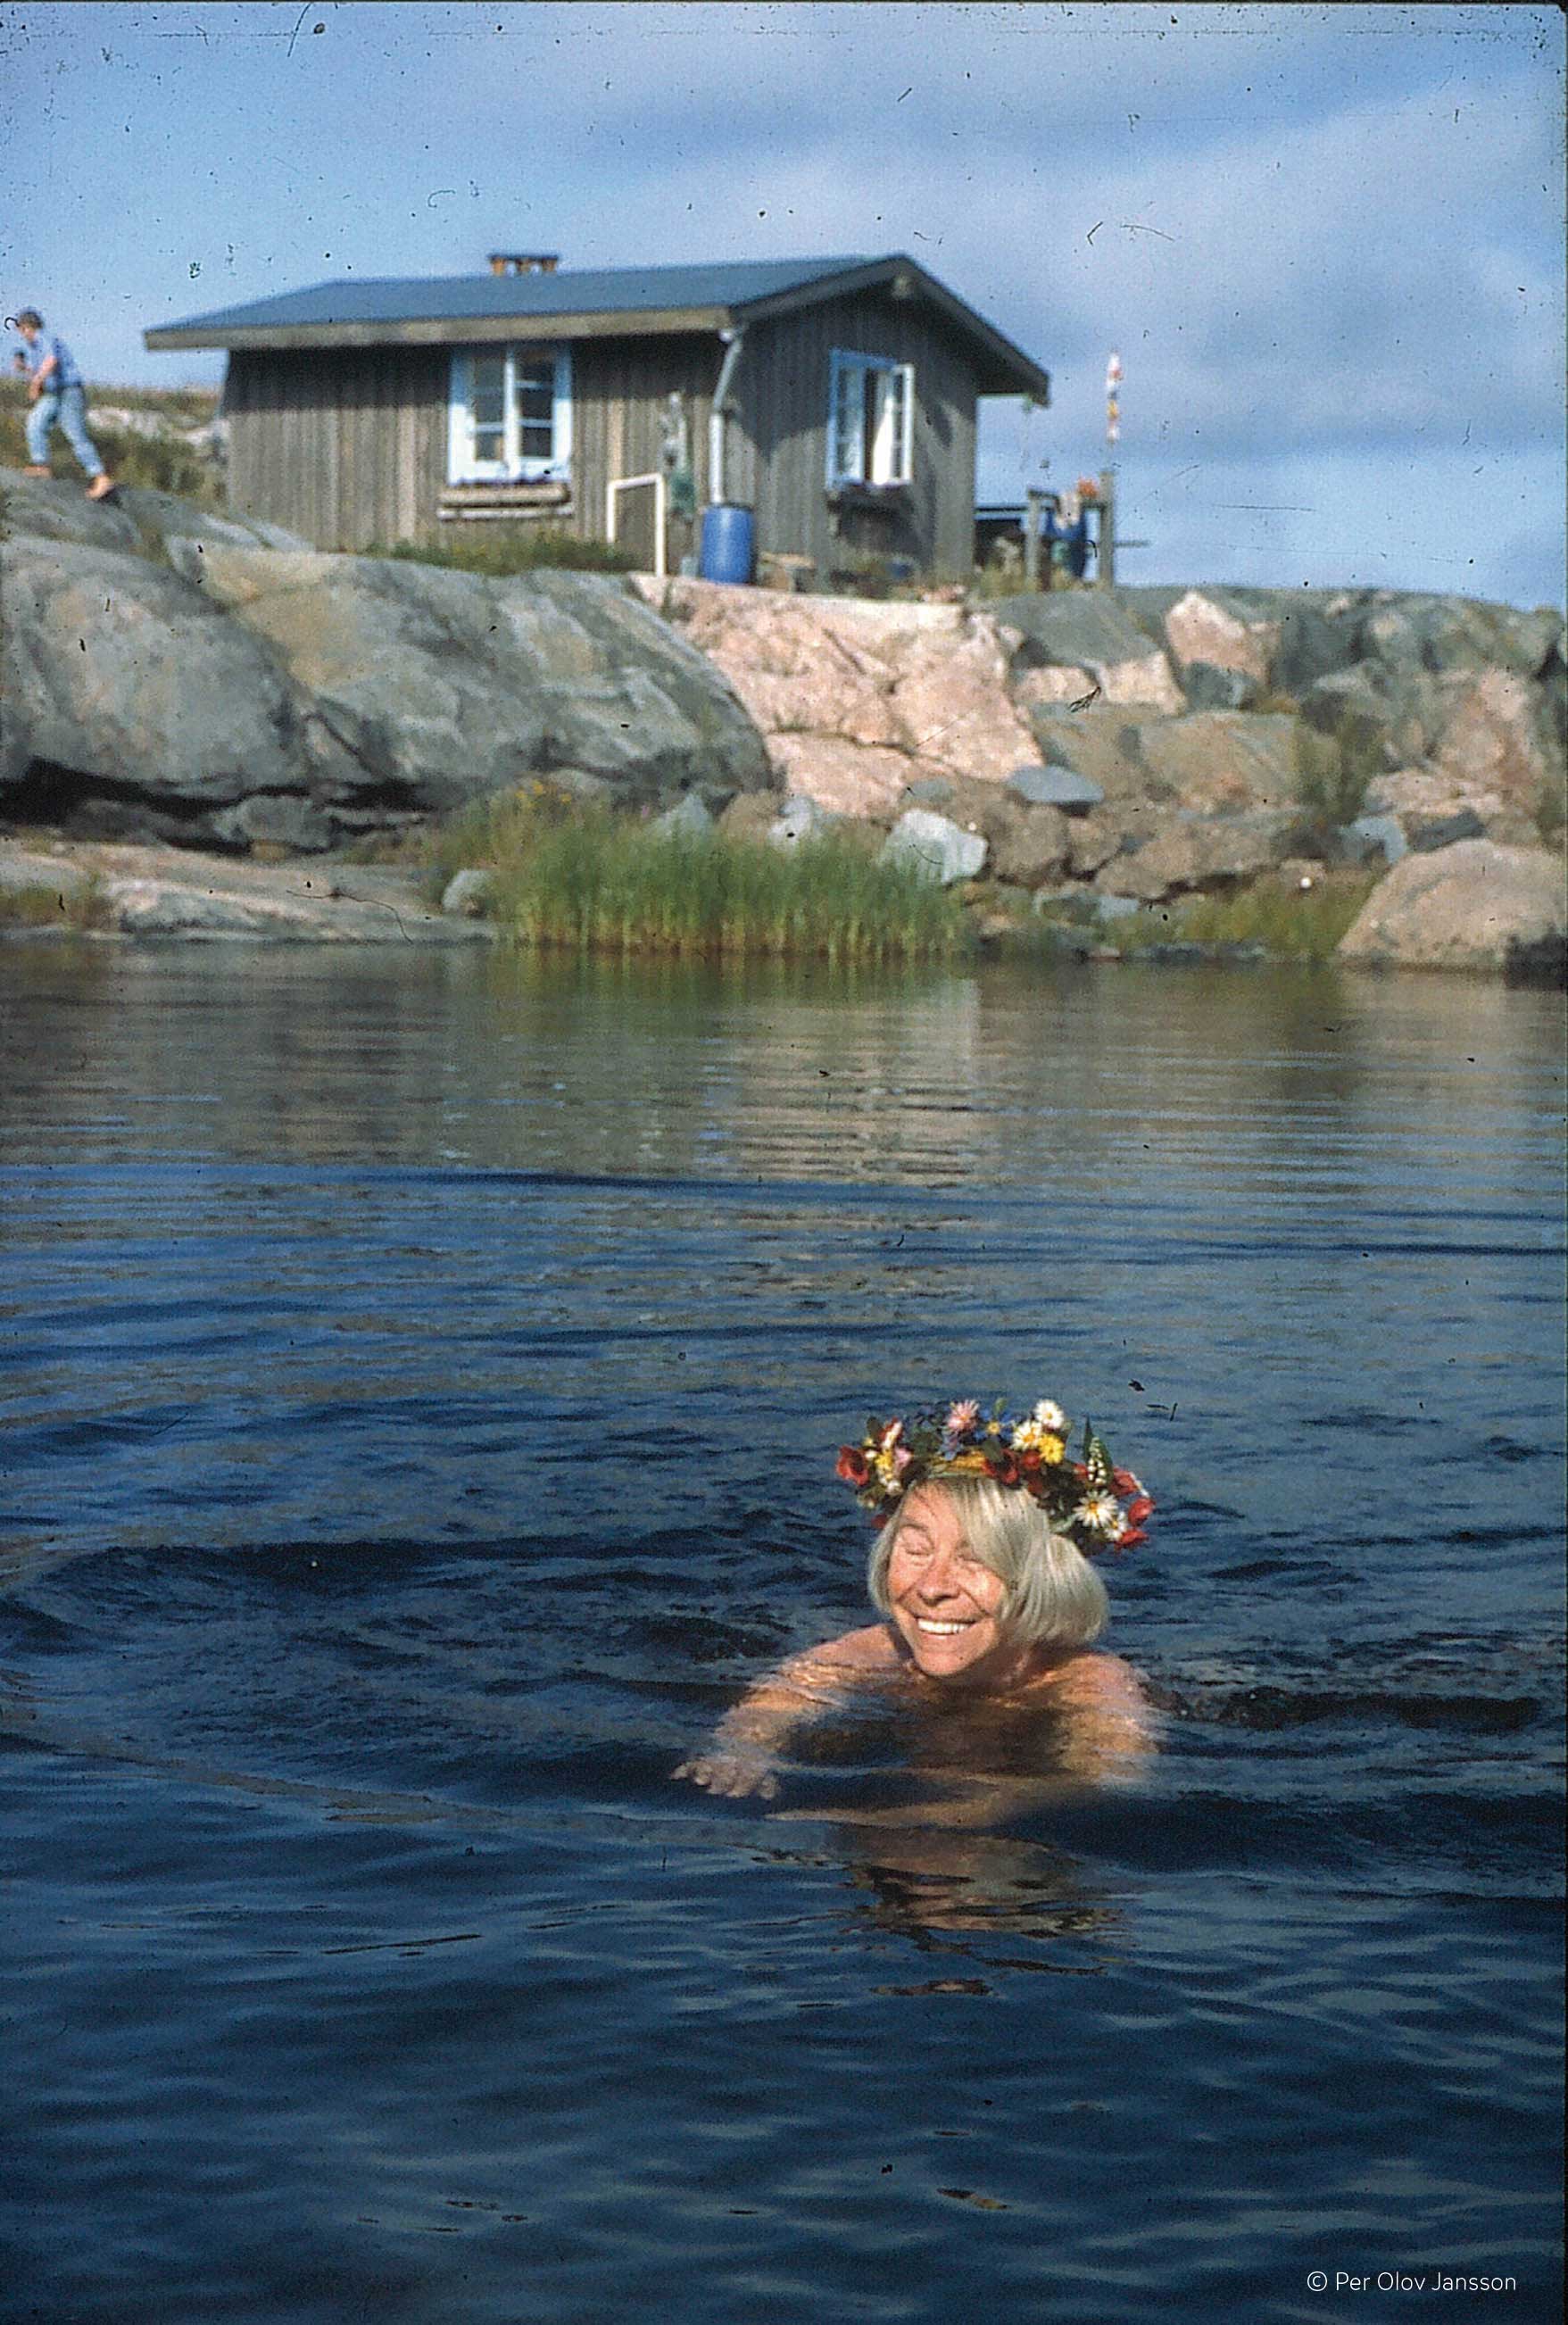 Tove Jansson swimming with her birthday flower crown on Klovharun. Photo: Per Olov Jansson